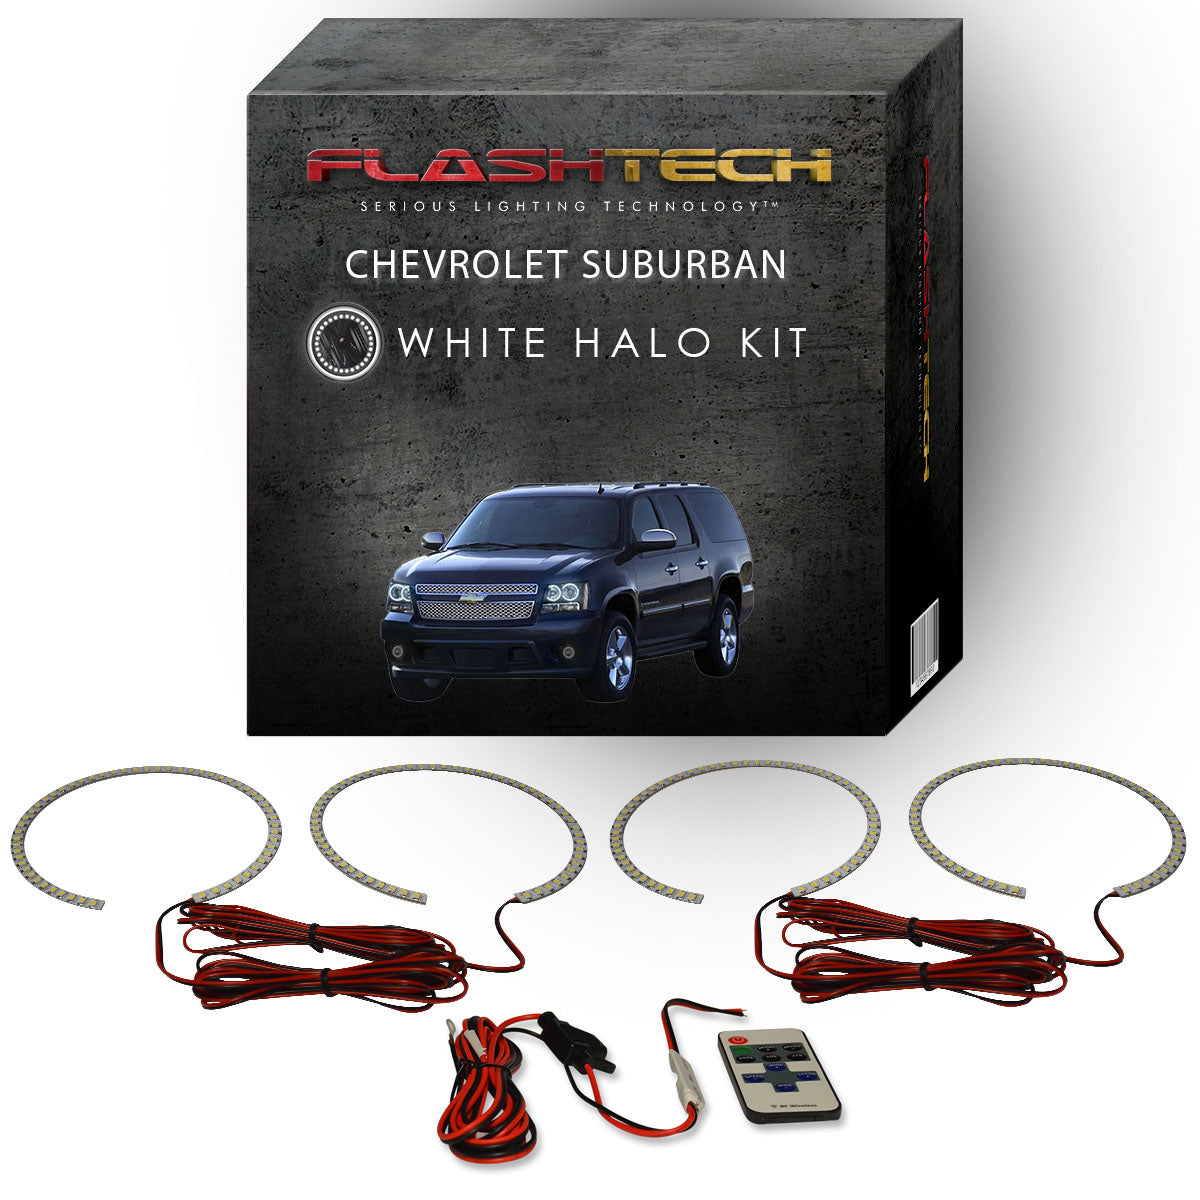 Chevrolet-Suburban-2007, 2008, 2009, 2010, 2011, 2012, 2013-LED-Halo-Headlights-White-RF Remote White-CY-SU0713-WHRF